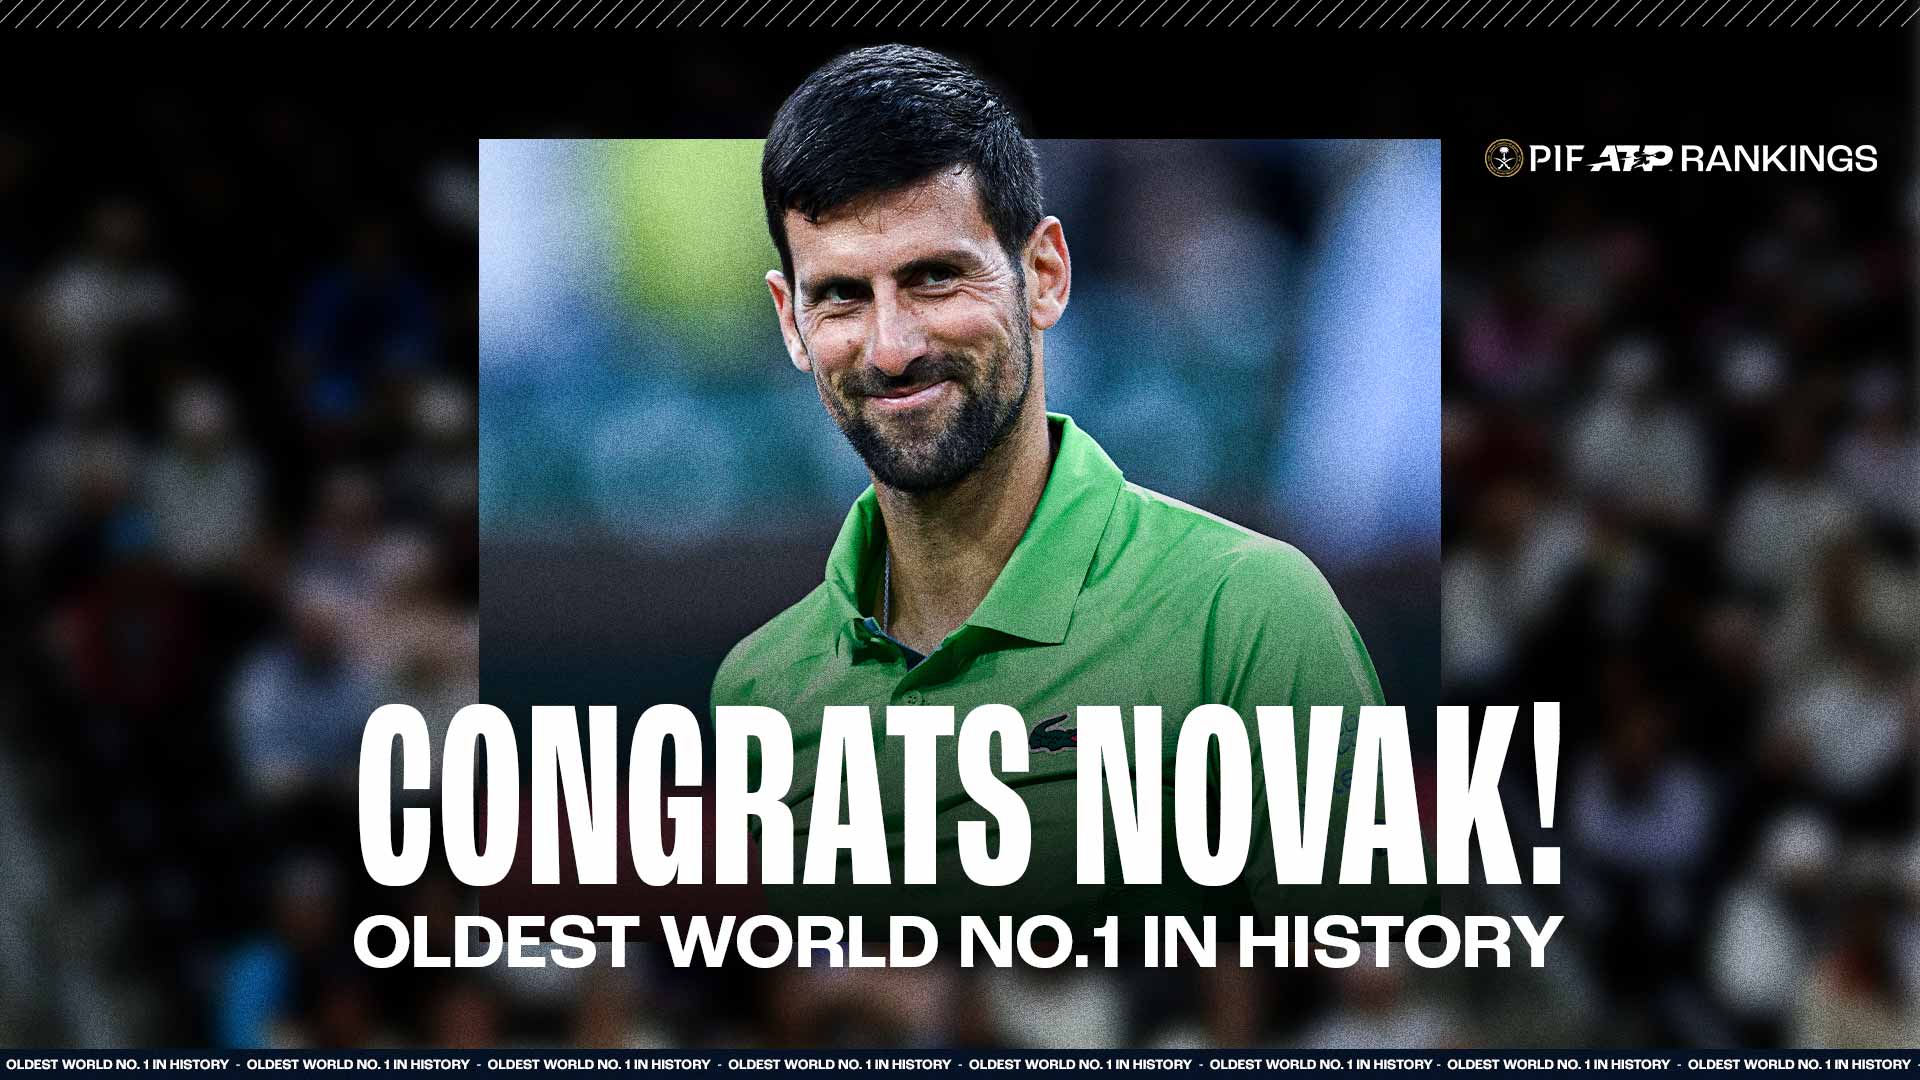 Novak Djokovic has today begun his record-extending 419th week atop the PIF ATP Rankings.